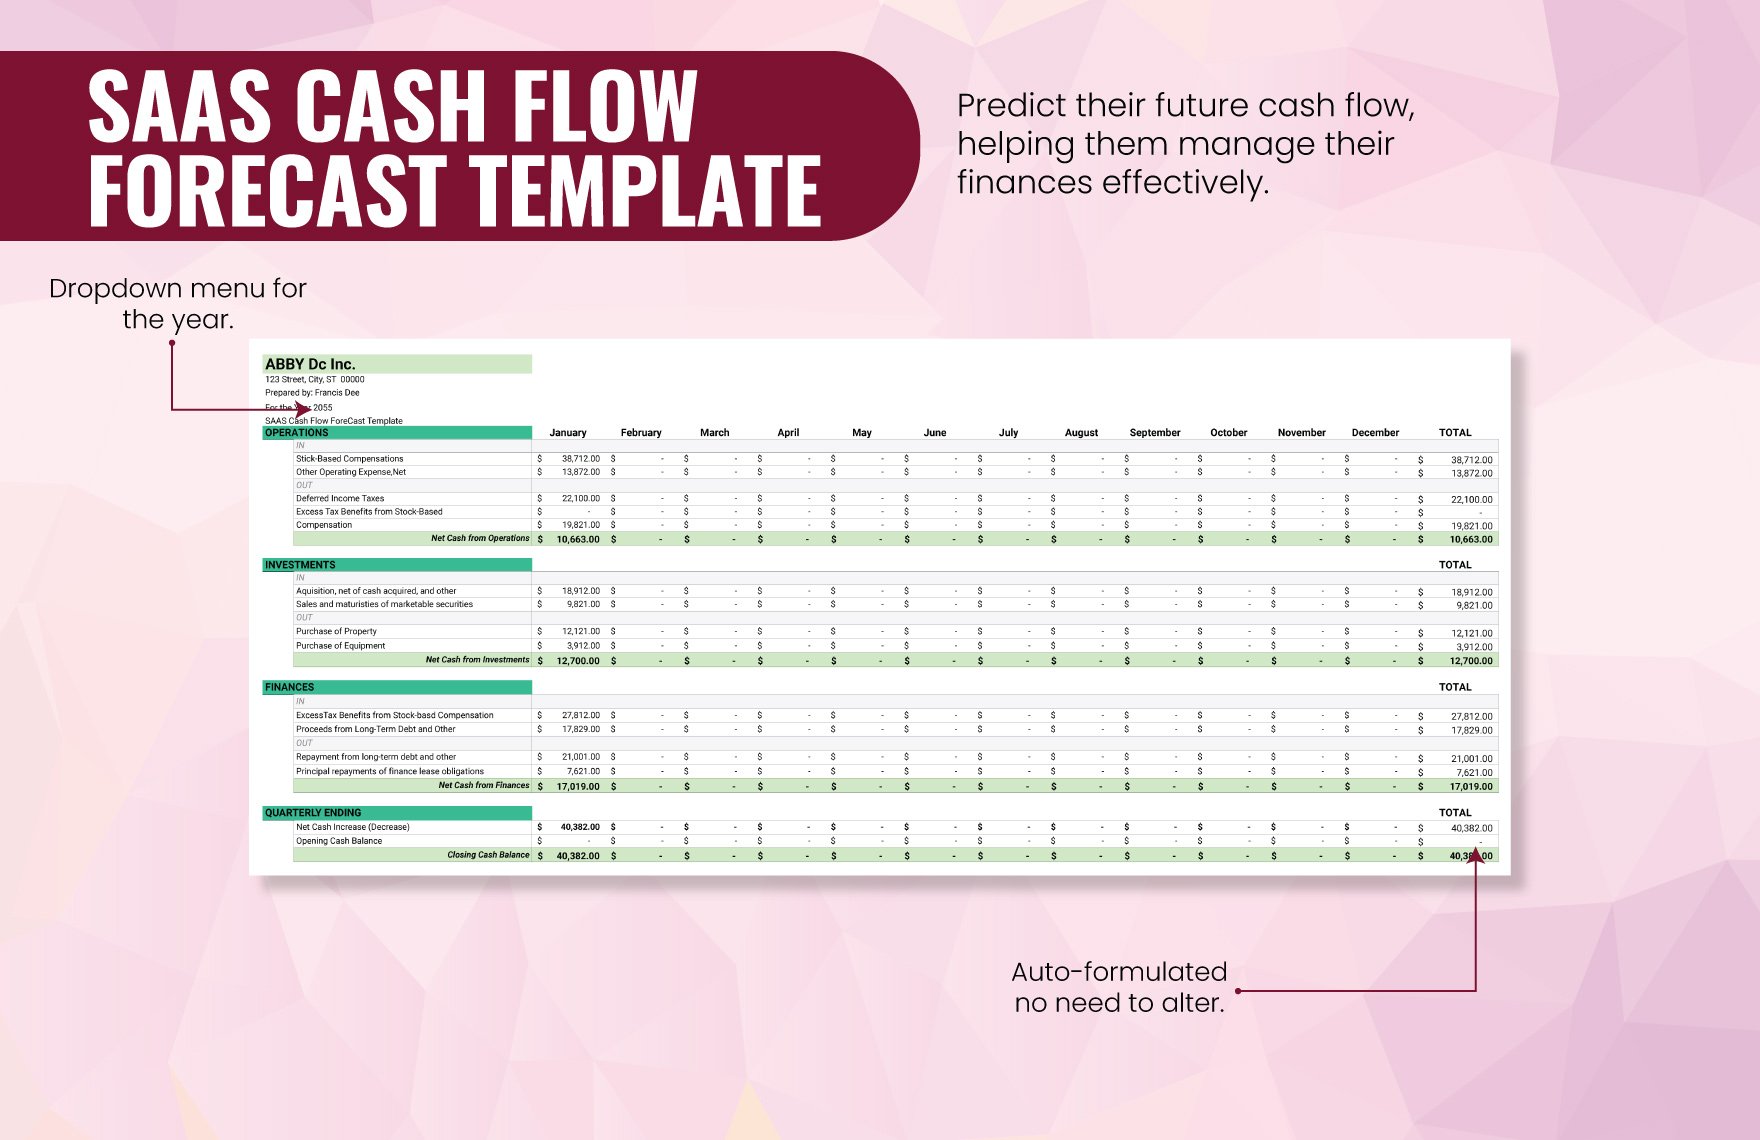 SaaS Cash Flow Forecast Template